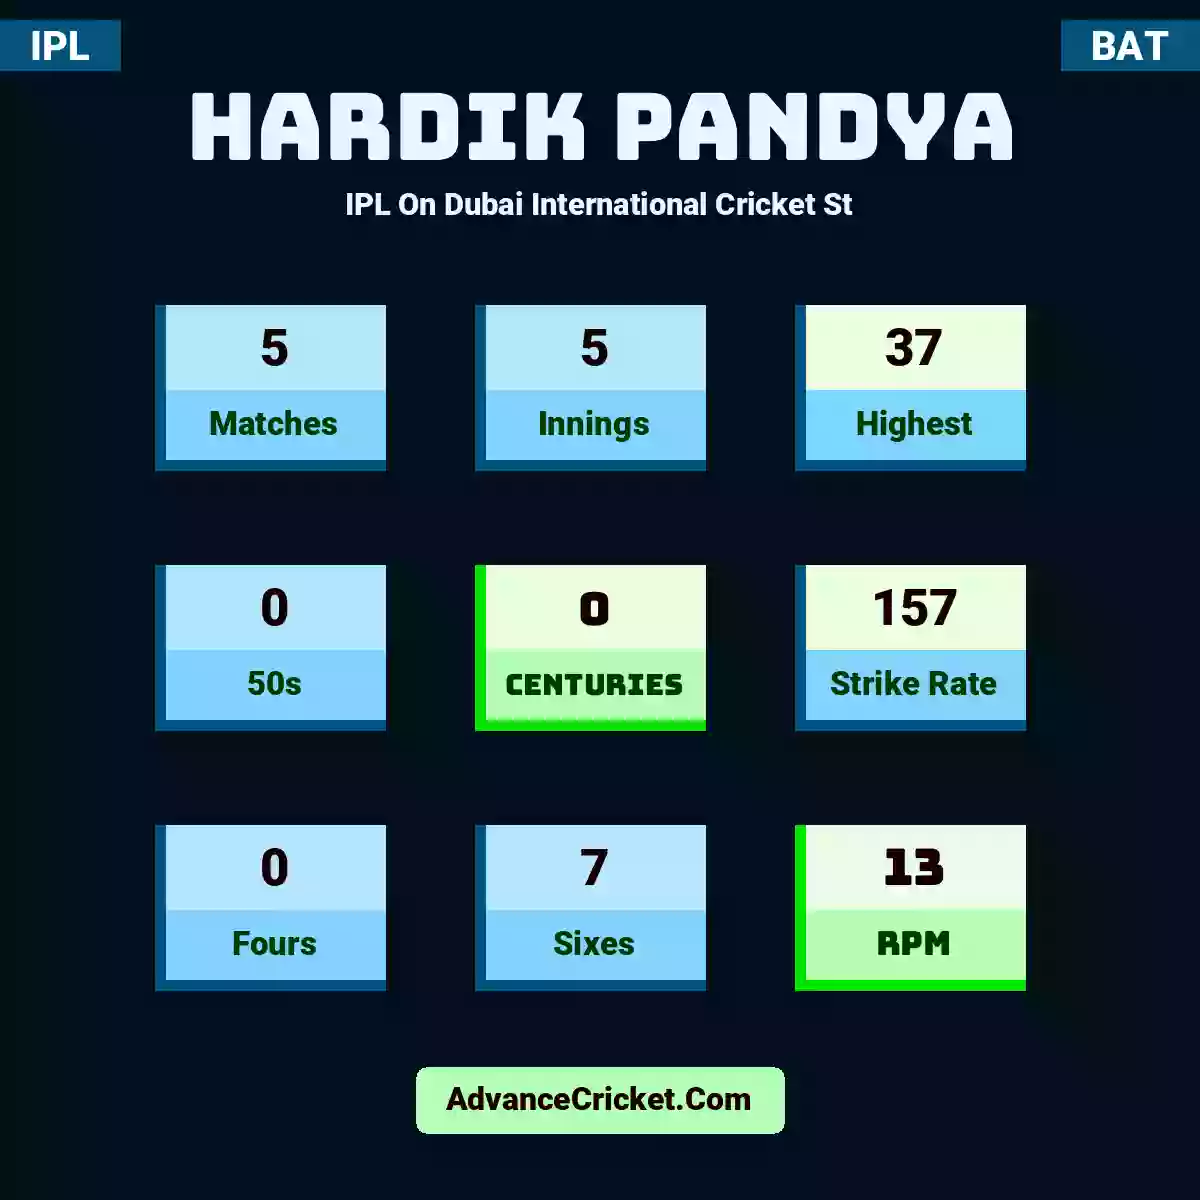 Hardik Pandya IPL  On Dubai International Cricket St, Hardik Pandya played 5 matches, scored 37 runs as highest, 0 half-centuries, and 0 centuries, with a strike rate of 157. H.Pandya hit 0 fours and 7 sixes, with an RPM of 13.